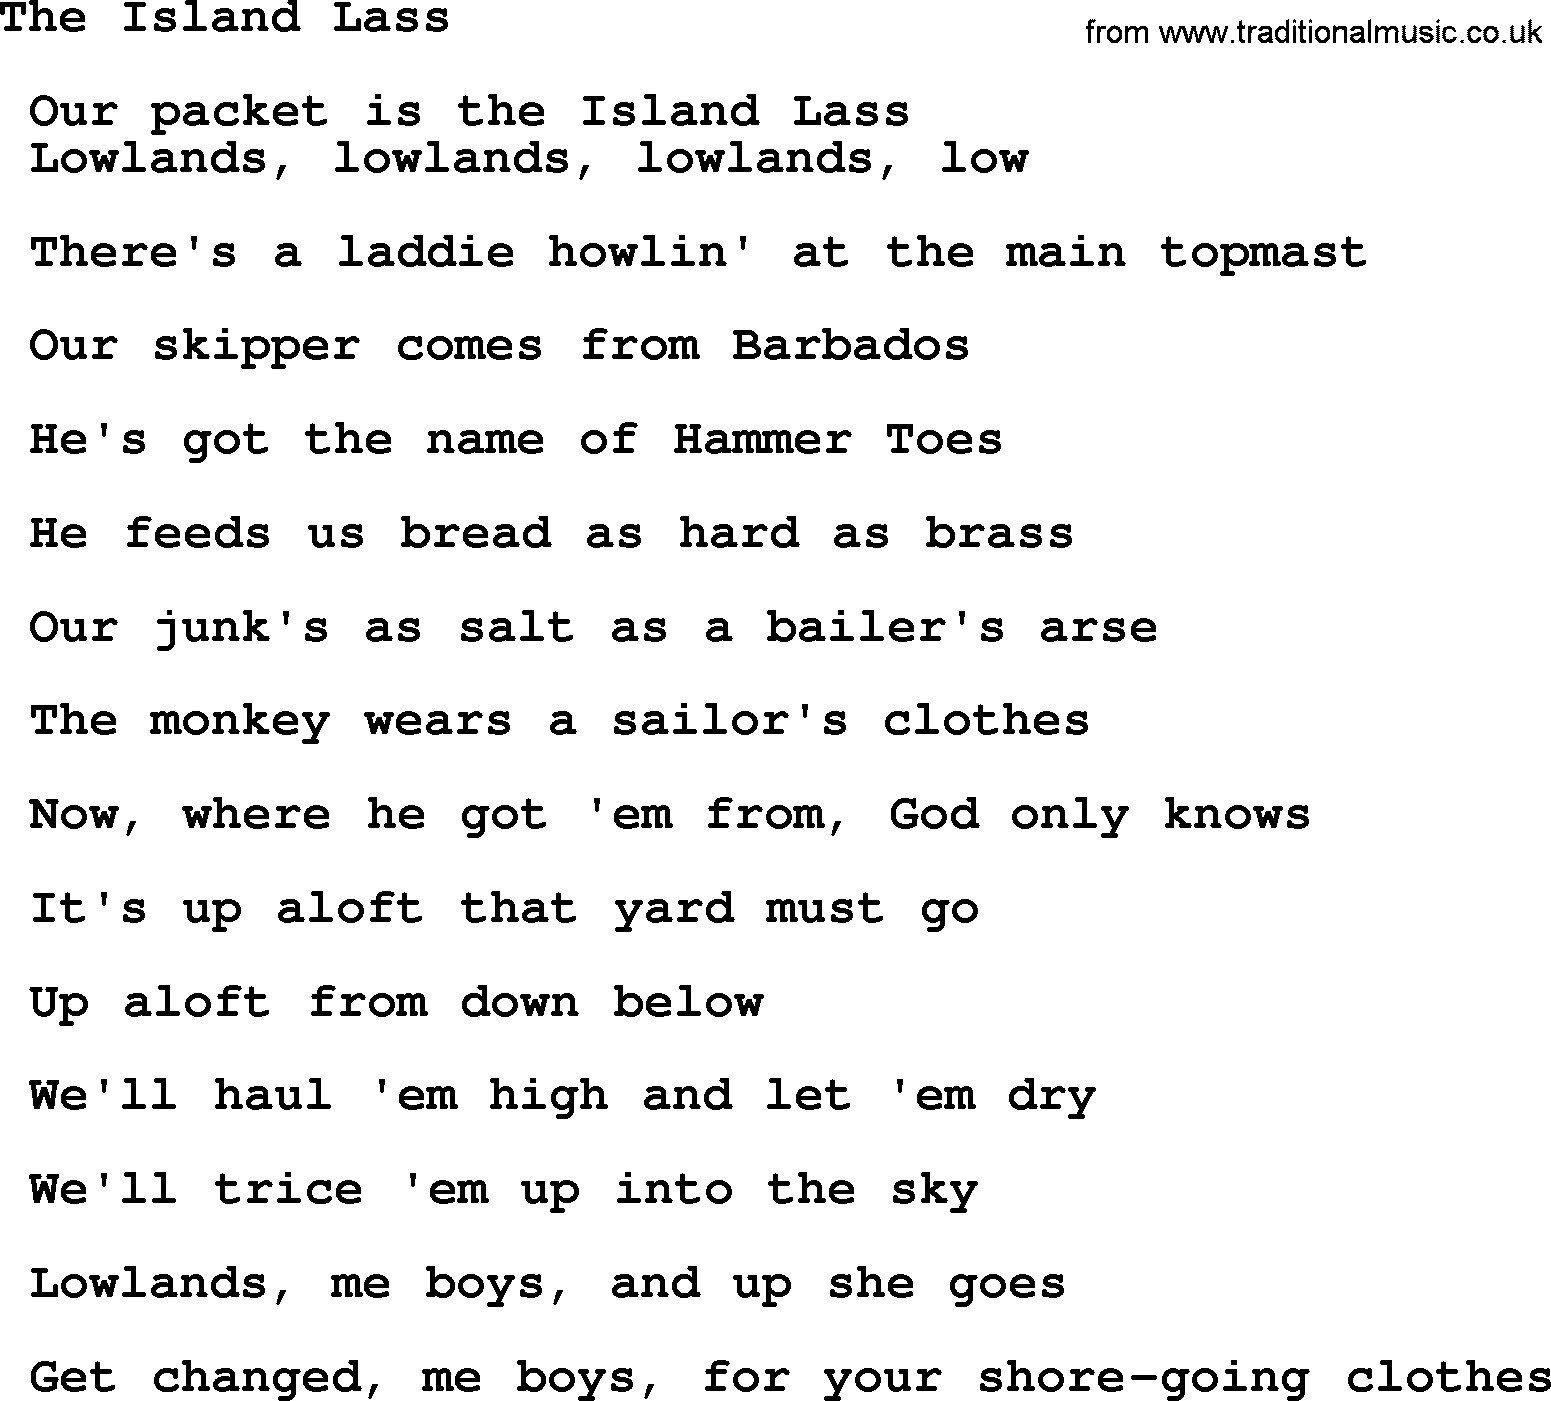 Sea Song or Shantie: The Island Lass, lyrics